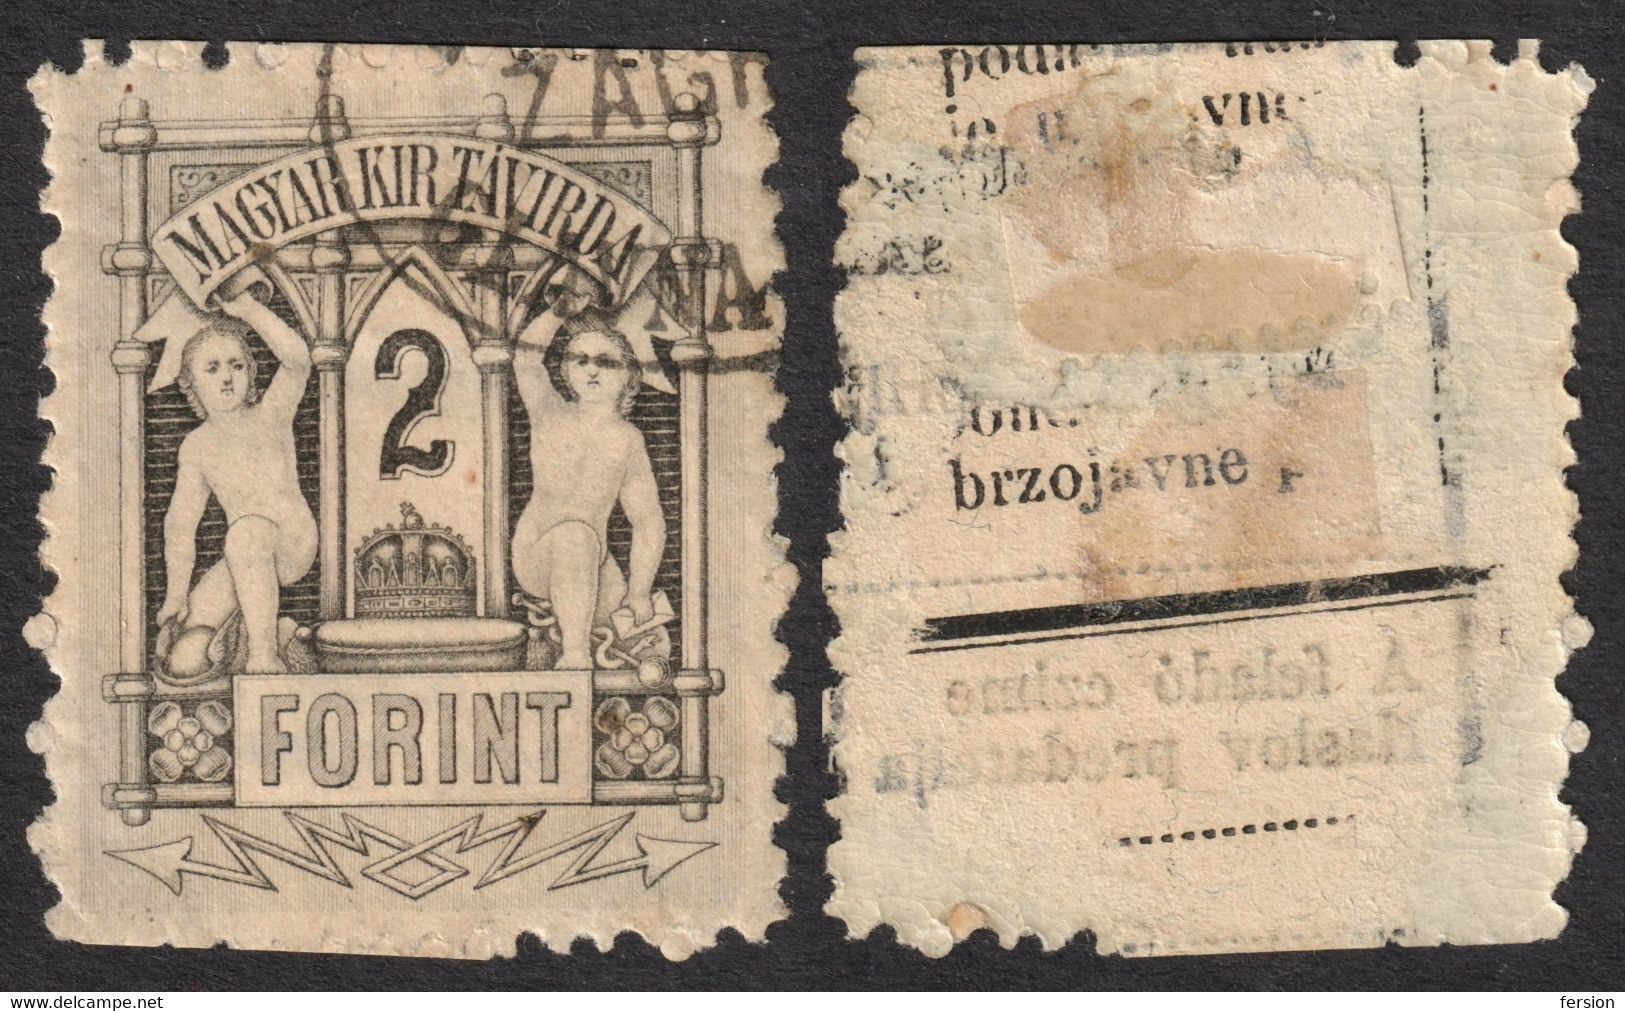 Zagreb Postmark CROATIA - TELEGRAPH Telegram TAX Stamp - 1873 HUNGARY - Copper Print 2 Ft - Used - Telegrafi